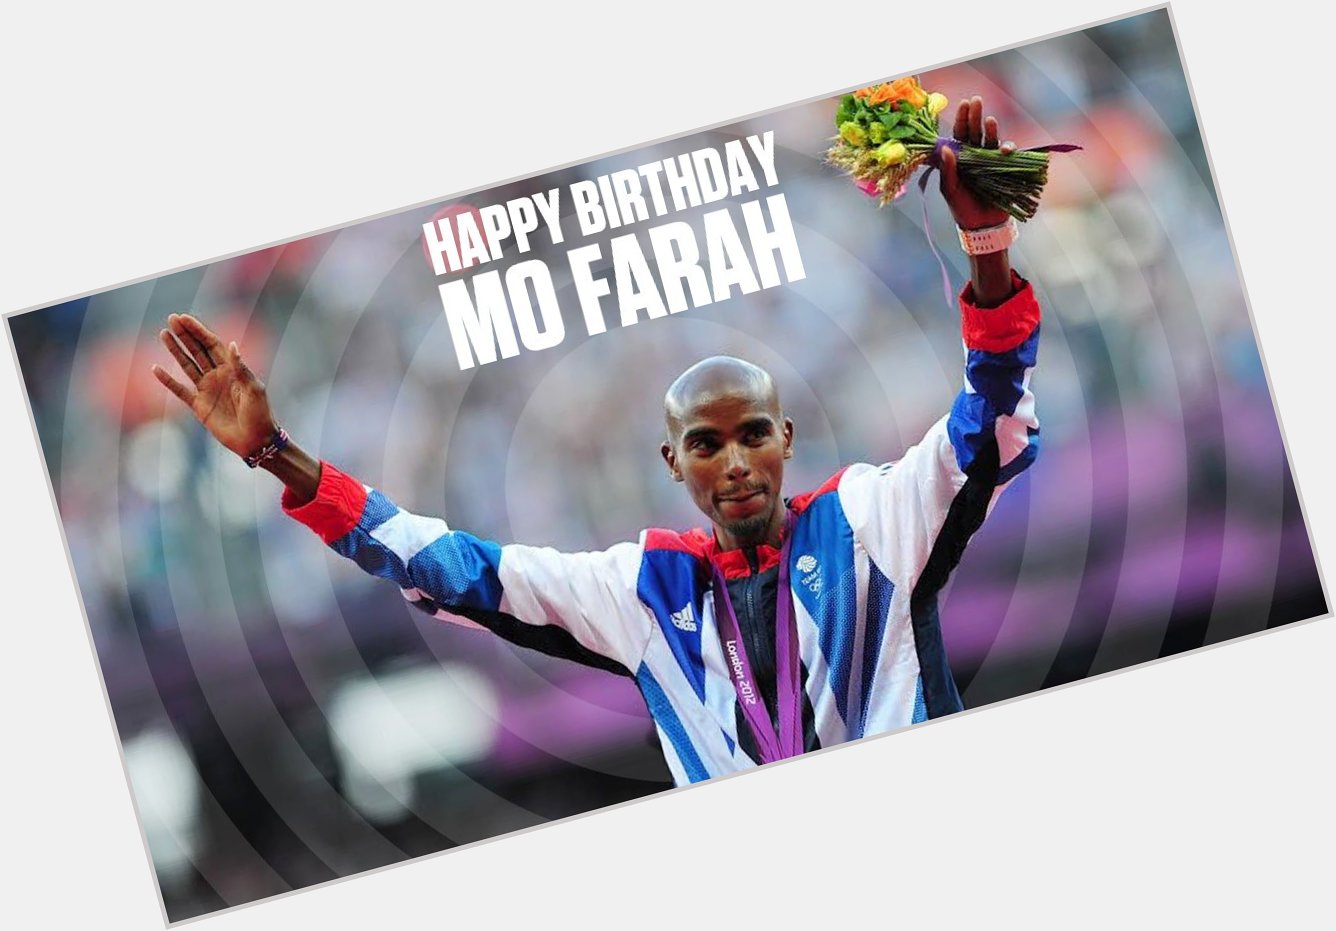 London 2012 5,000m London 2012 10,000m Rio 2016 5,000m Rio 2016 10,000m Happy Birthday to Sir Mo Farah 